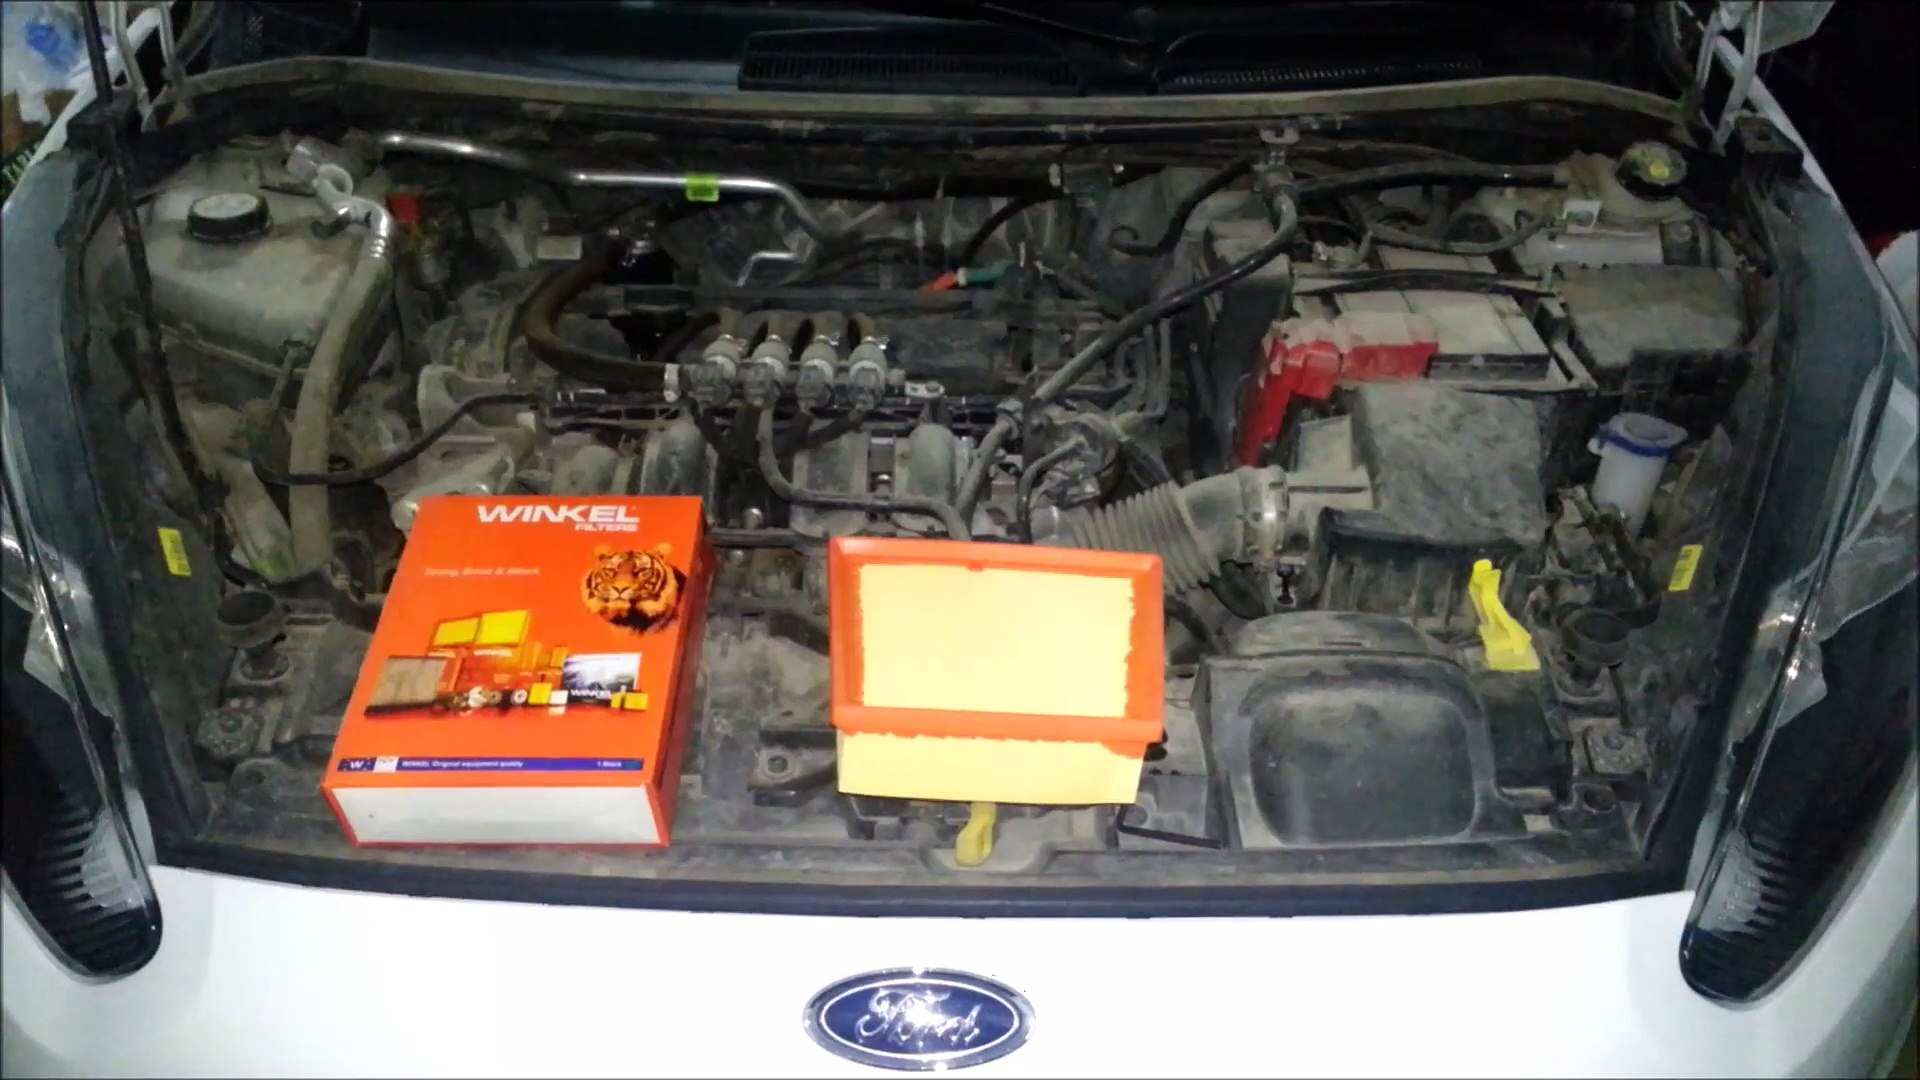 Ford Fiesta 2013 1.25 82 PS hava filtresi (changing air filter) değişimi -  Dailymotion Video